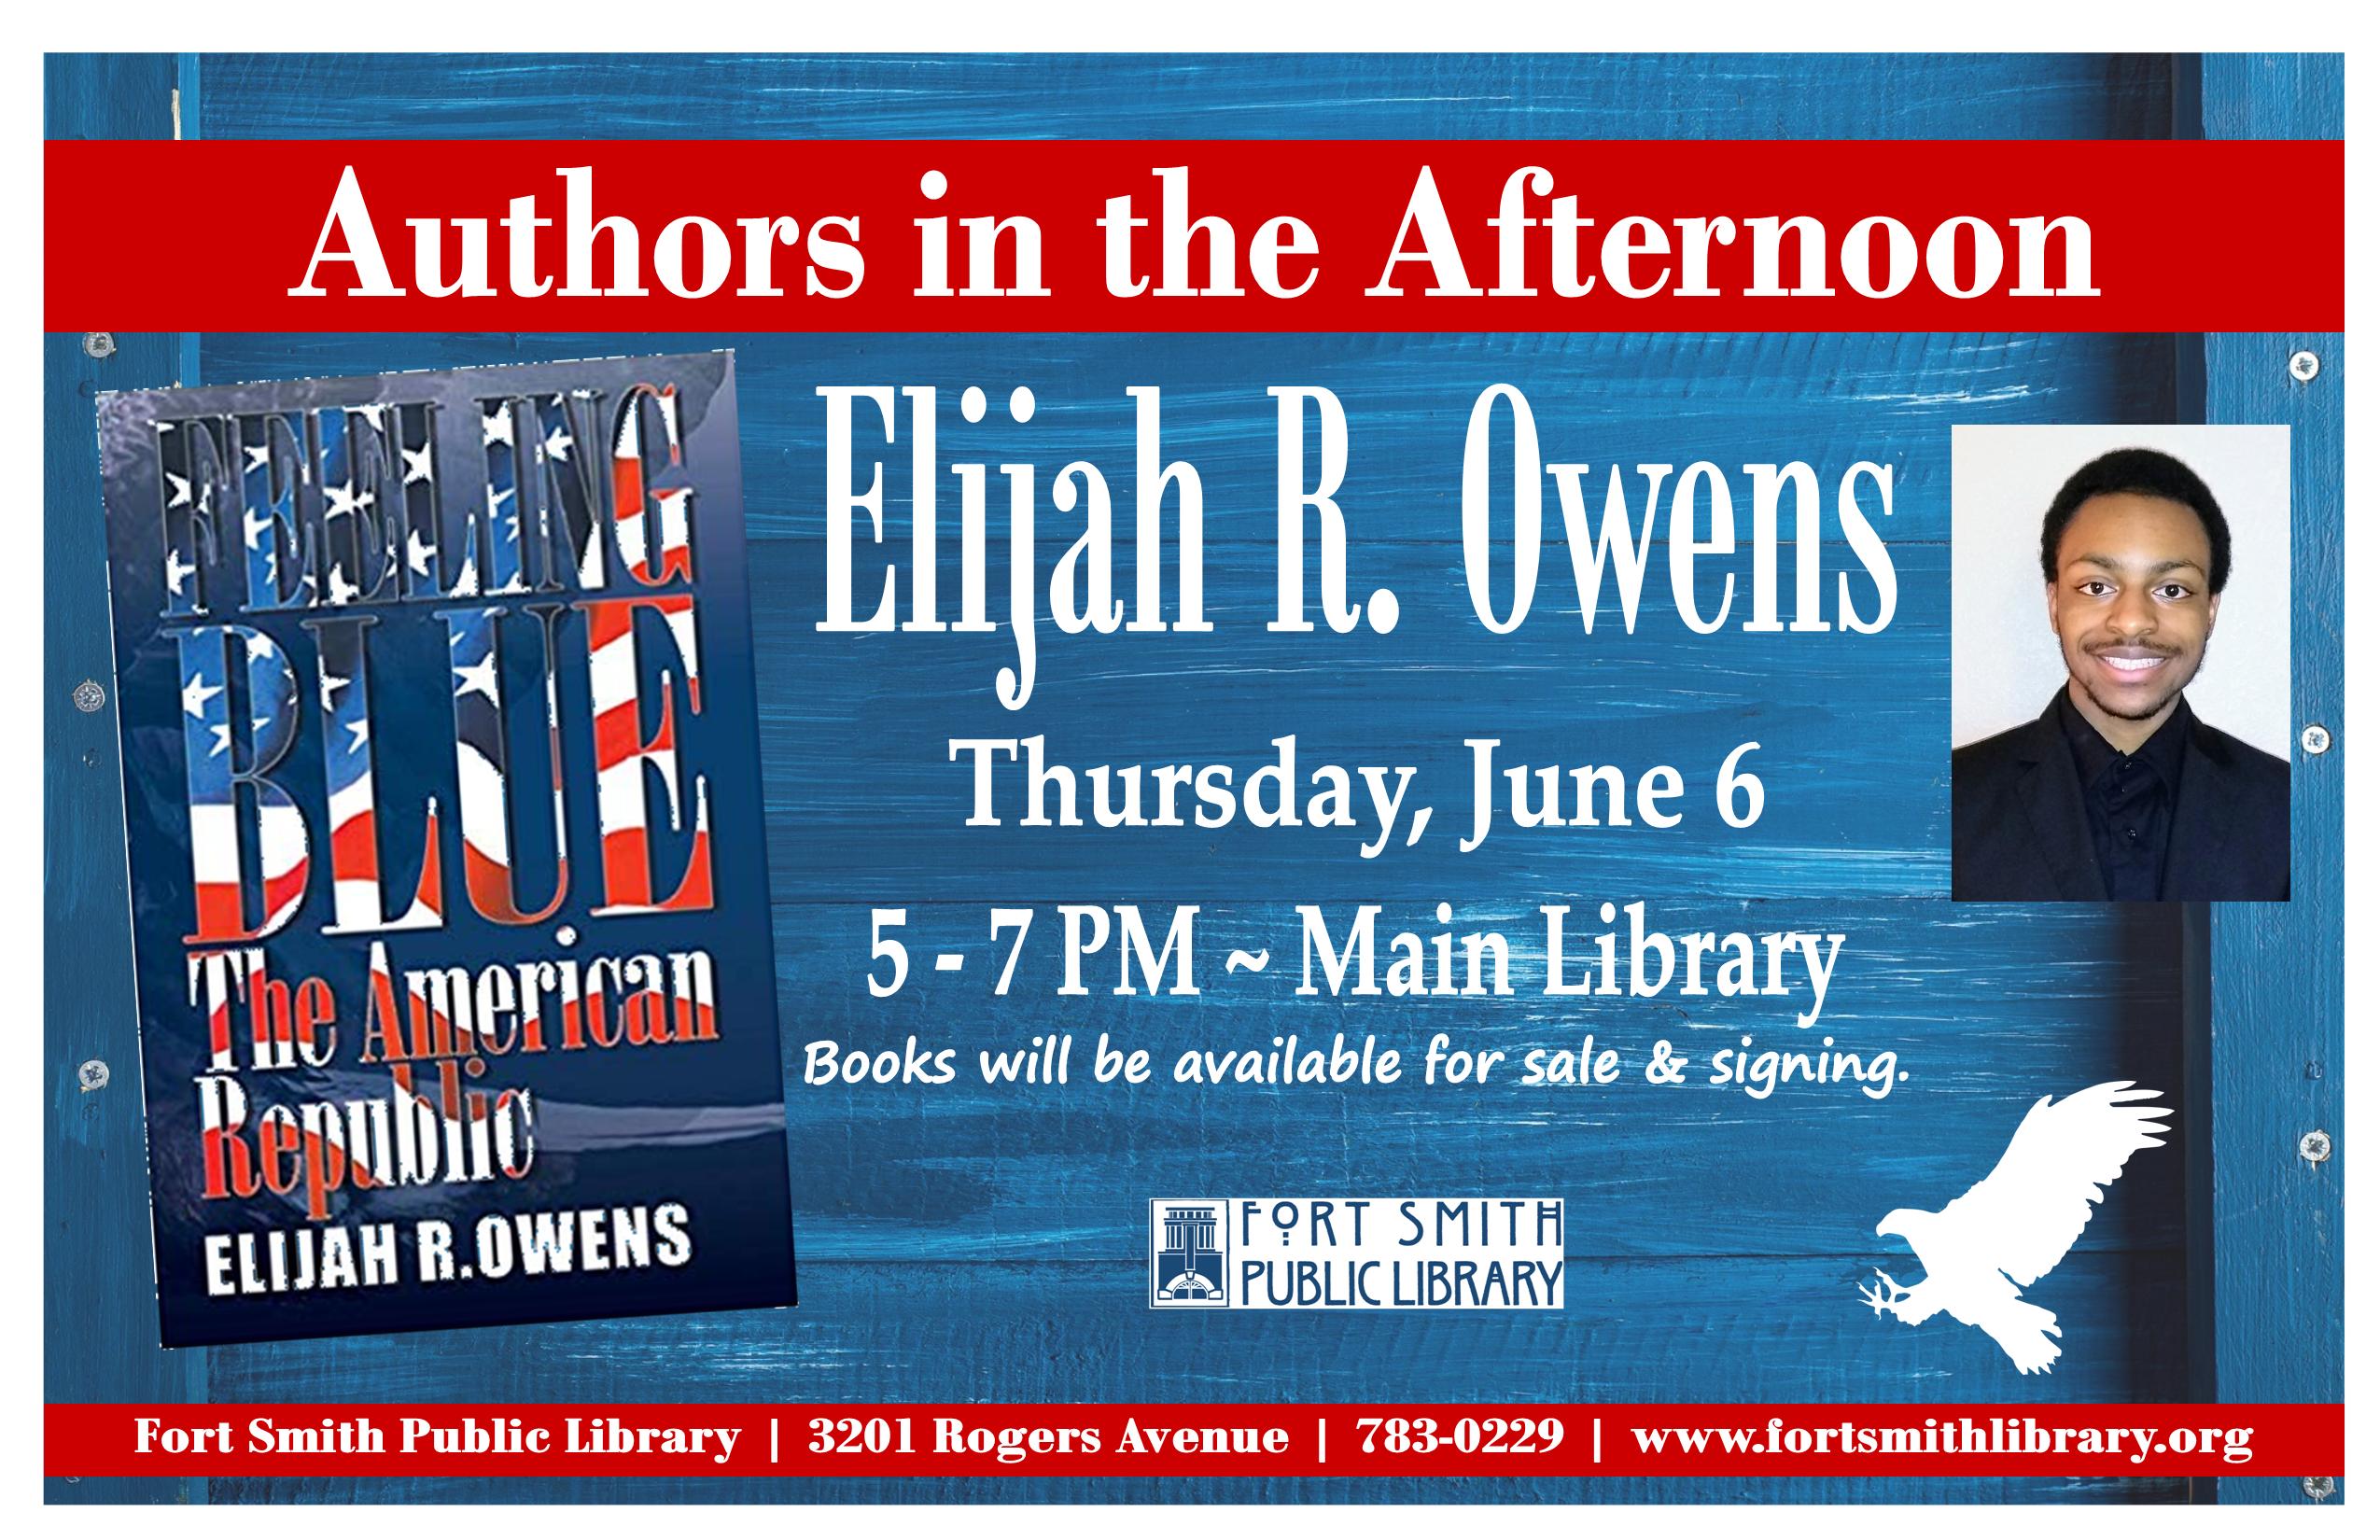 poster for Elijah R. Owen's book signing